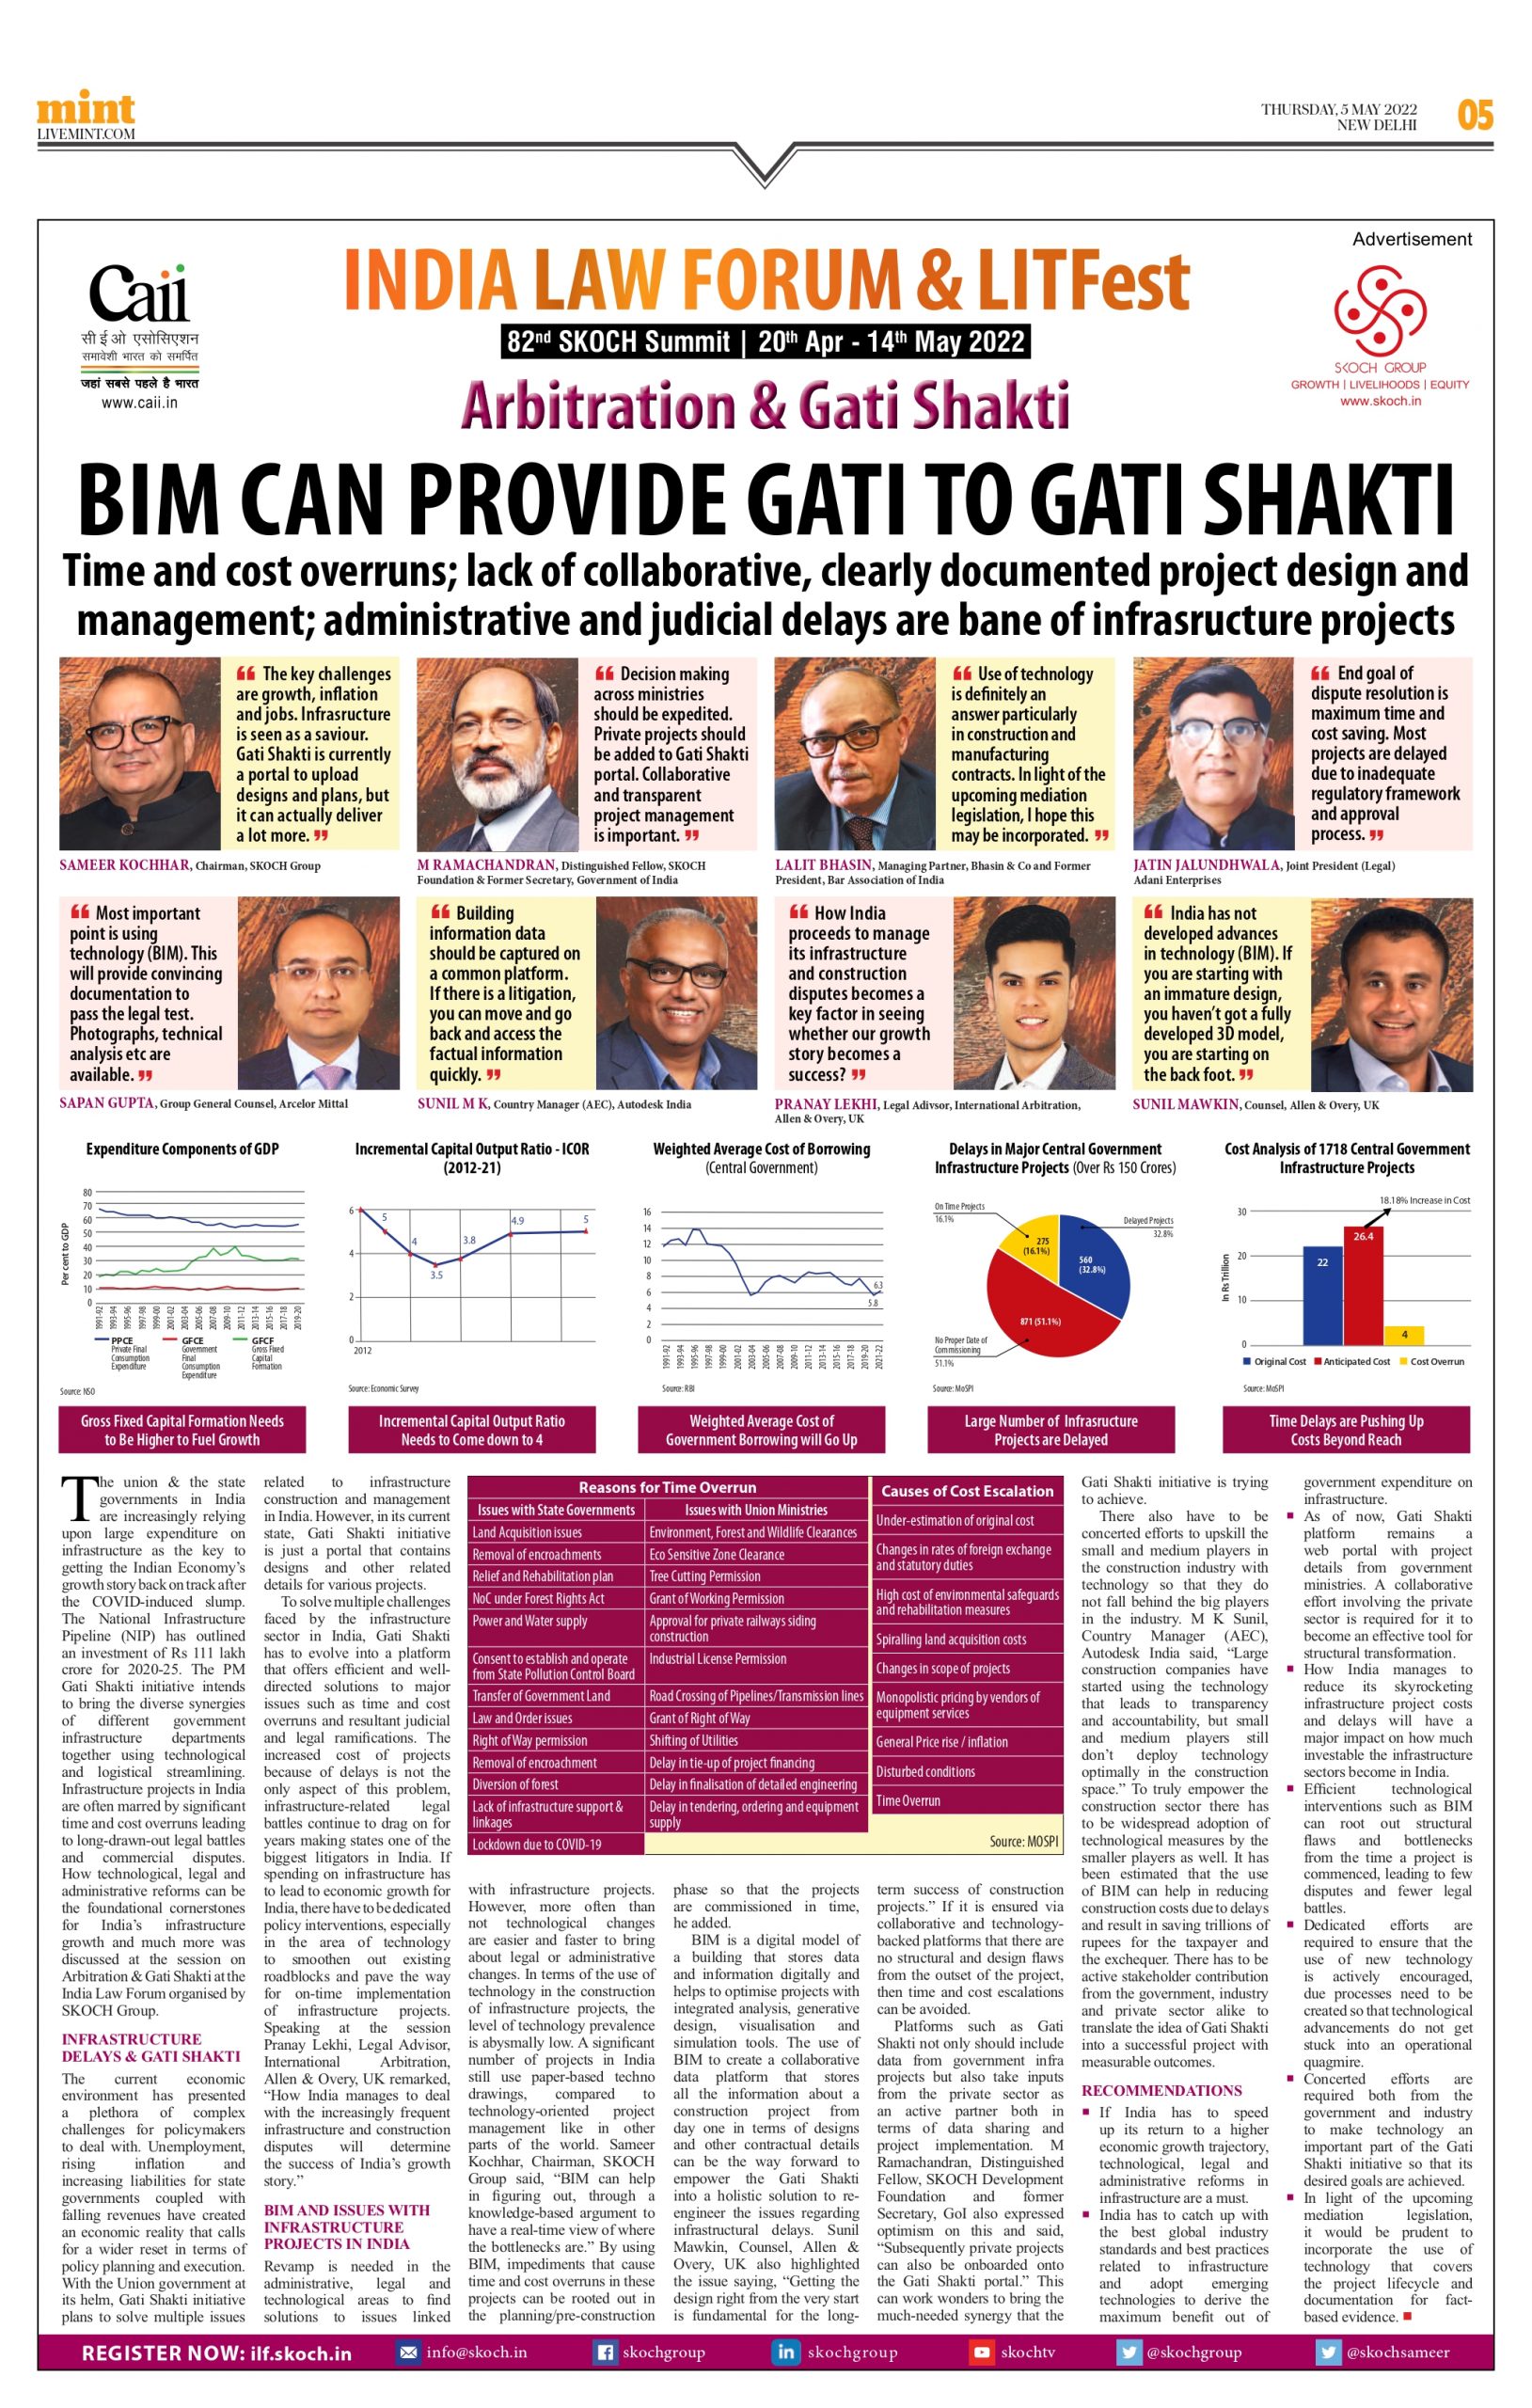 BIM can provide Gati to Gati Shakti